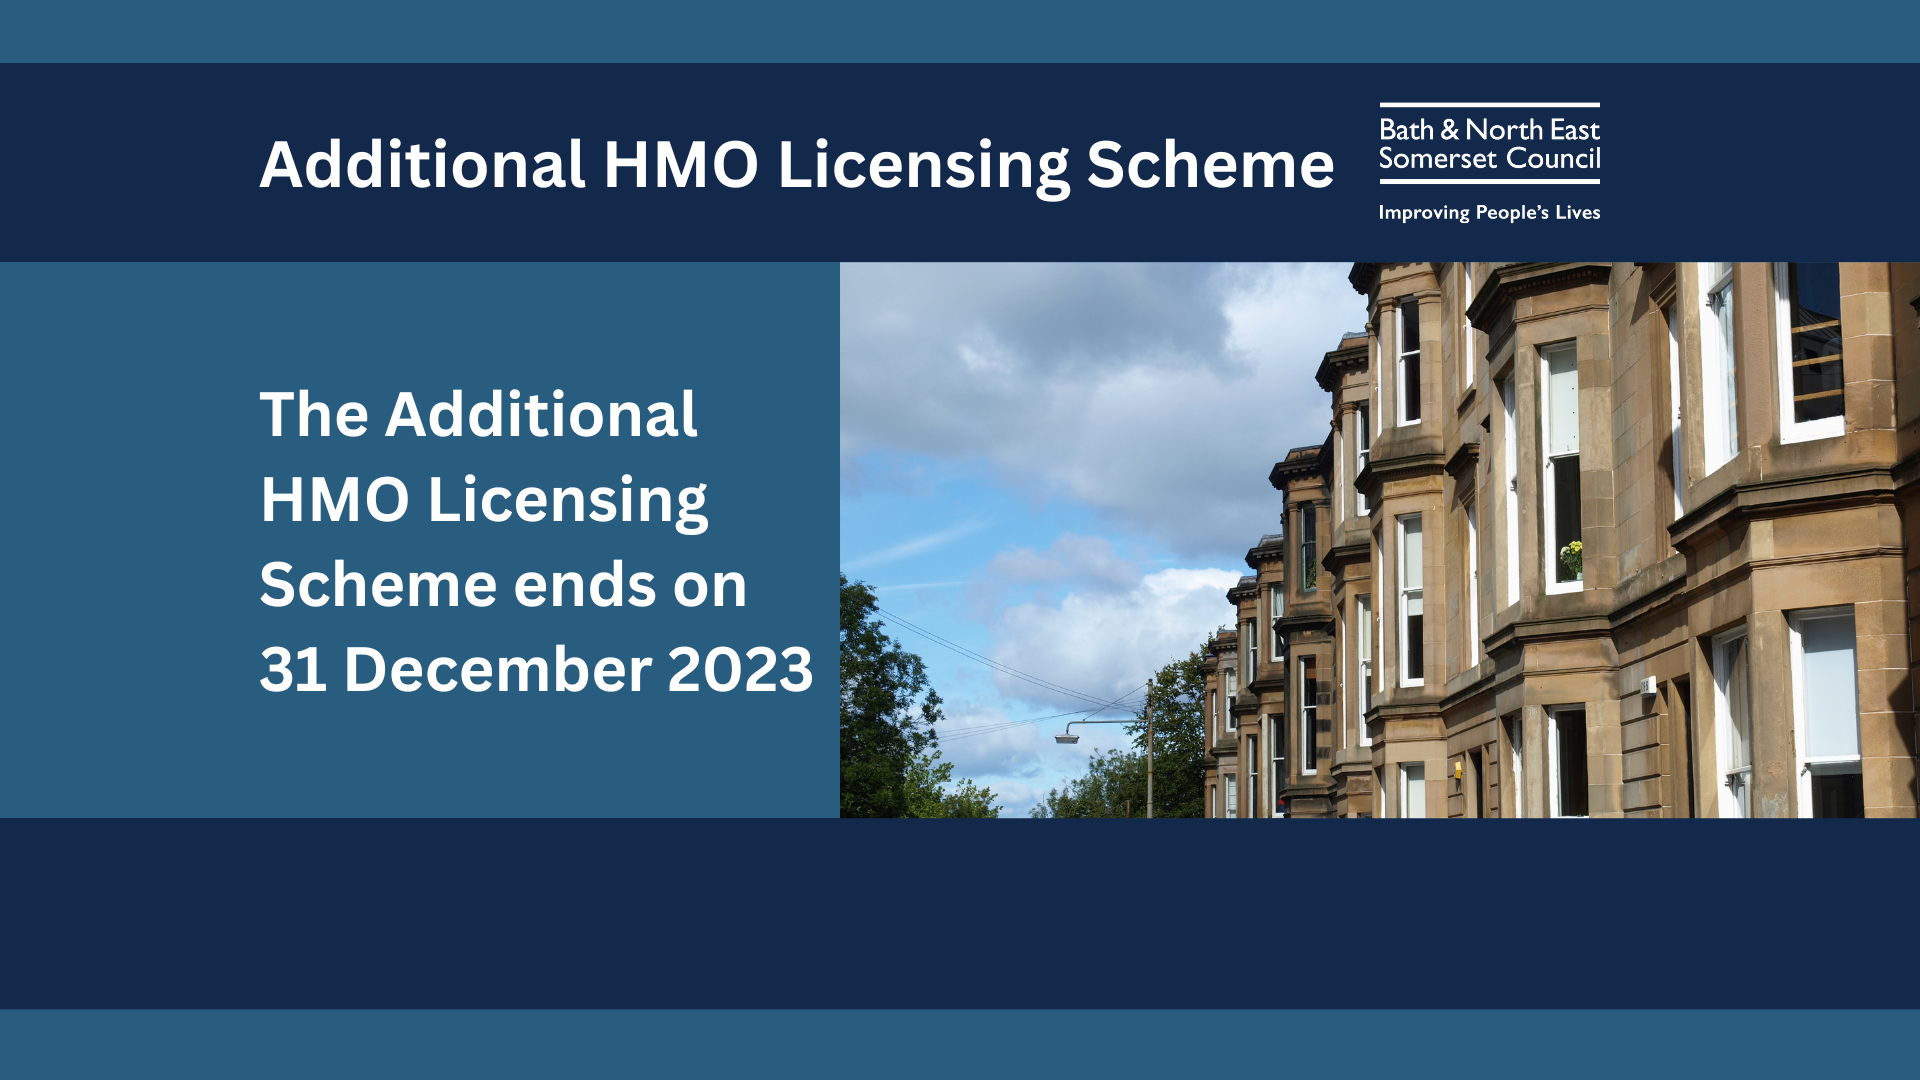 Additional HMO Licensing Scheme ending in Bath